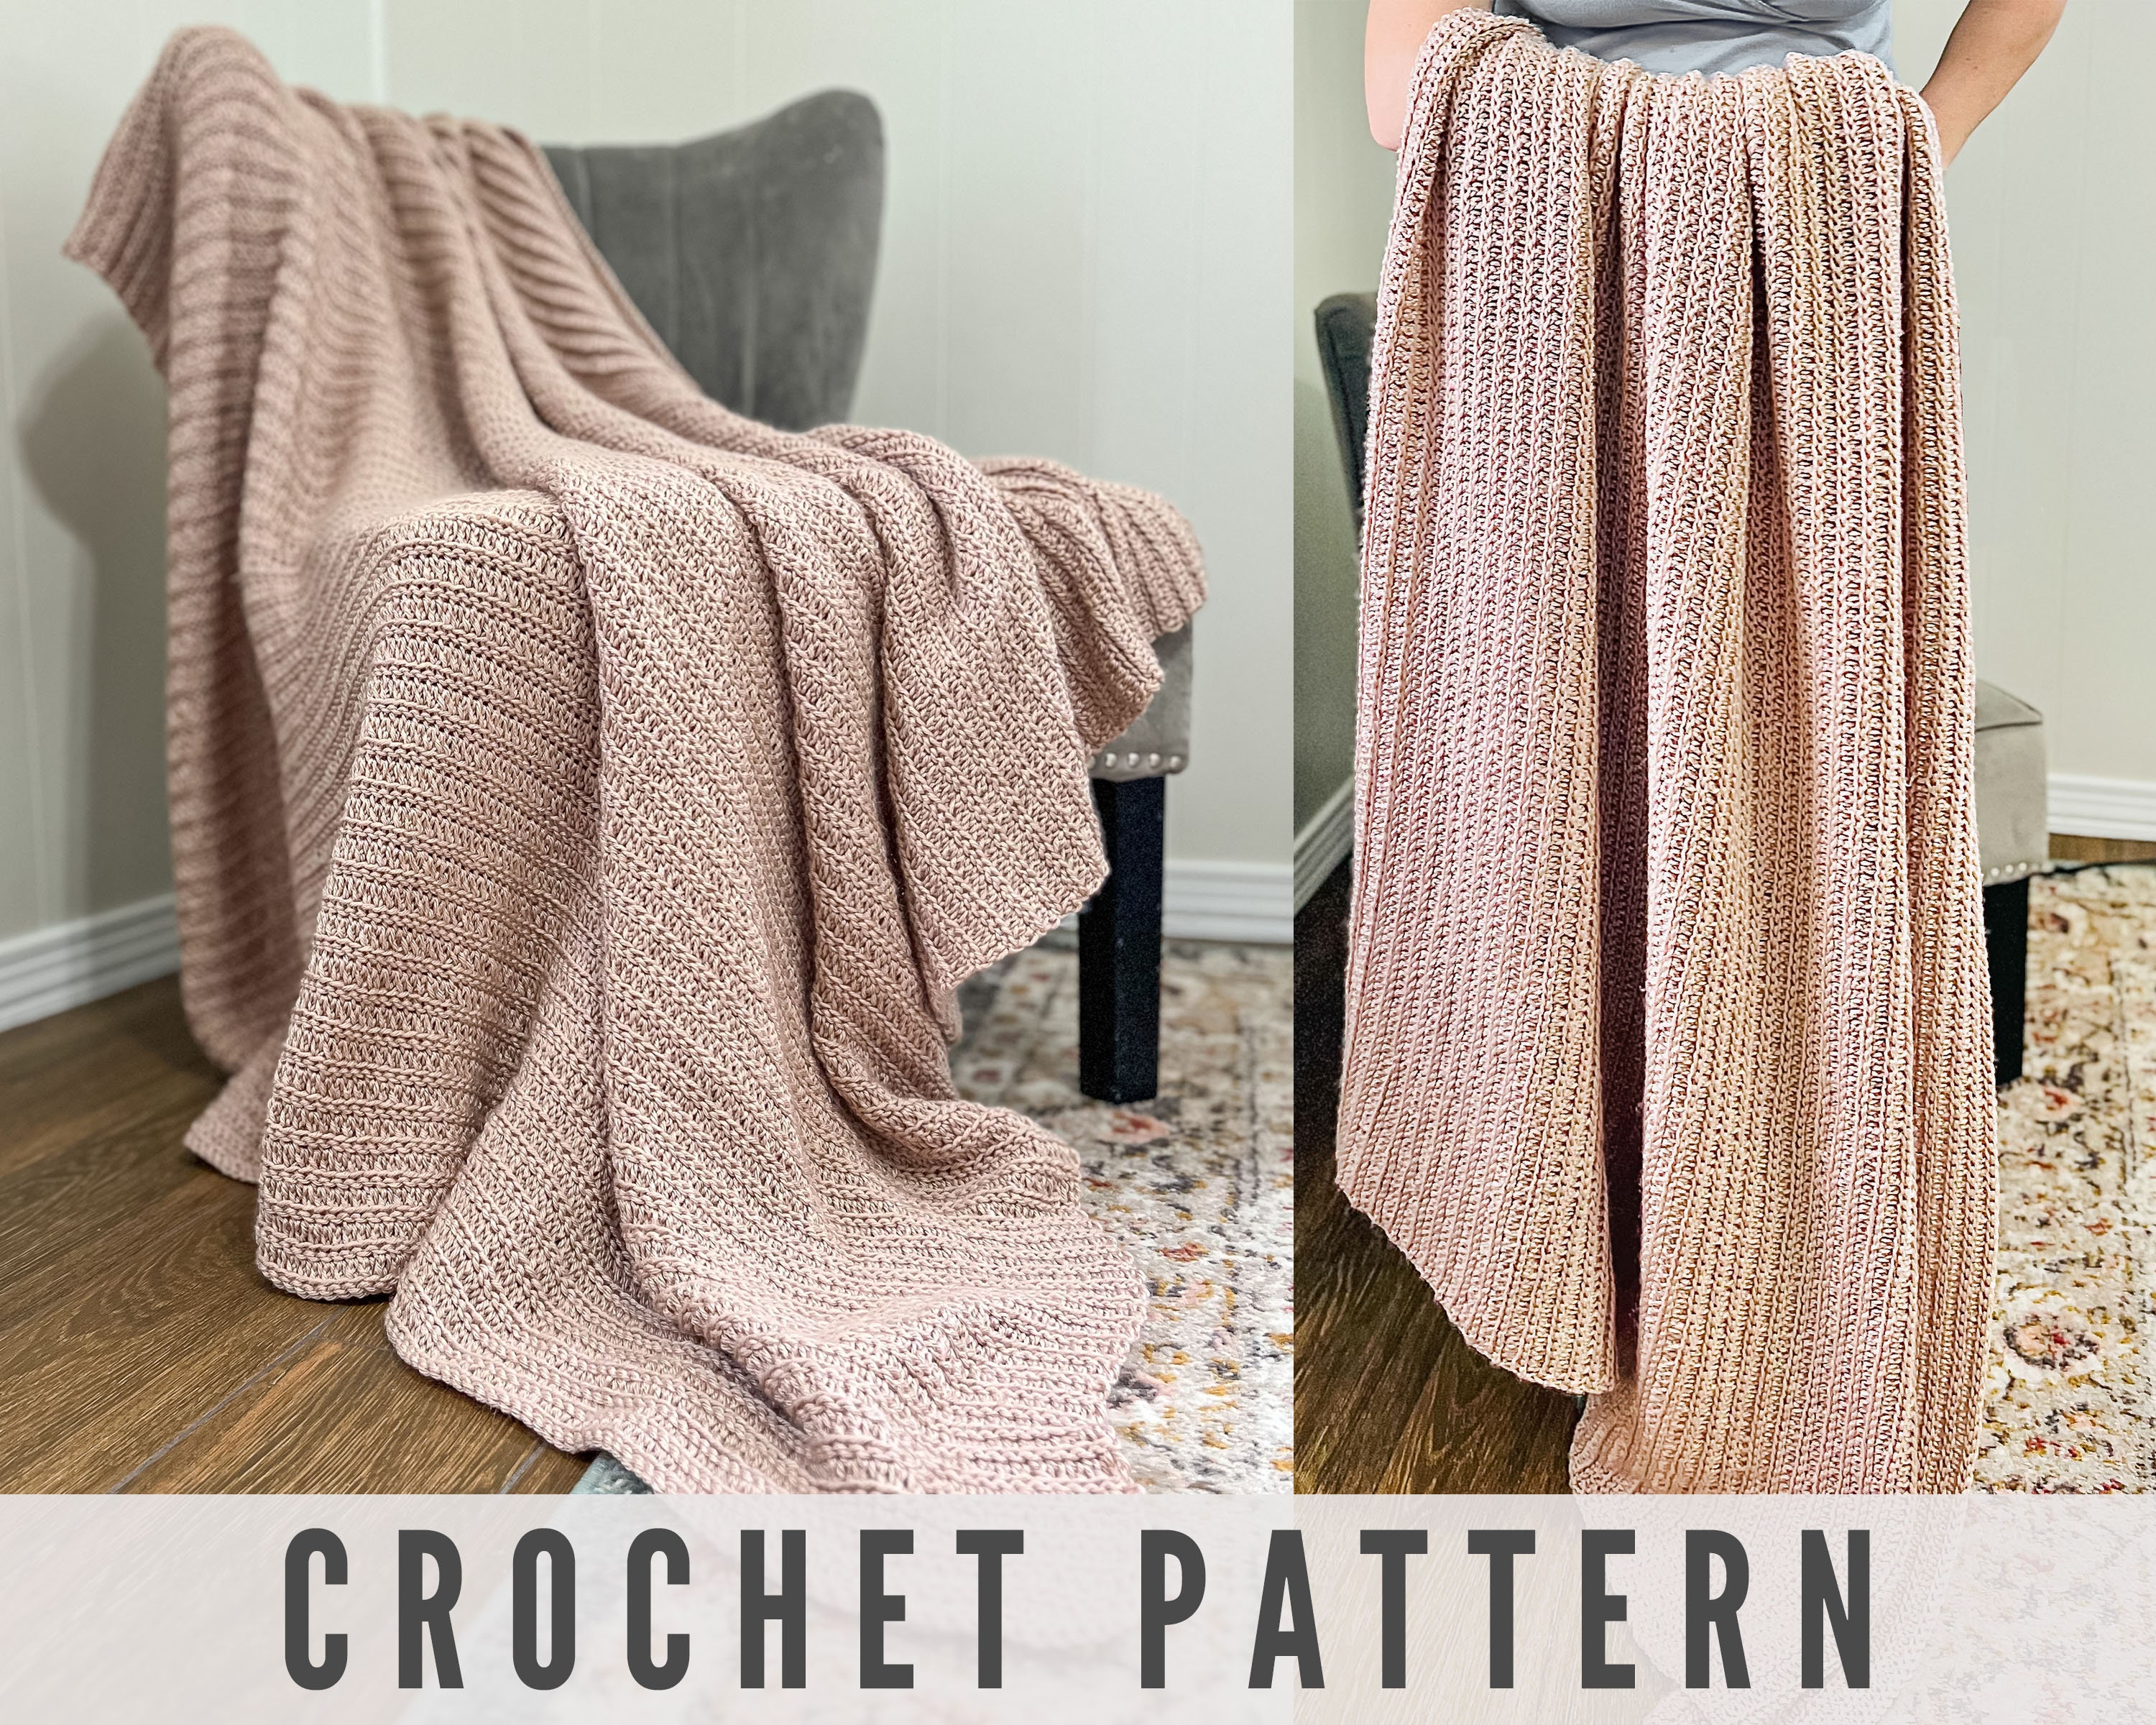 CROCHET PATTERN Knit Look Crochet Blanket Afghan Throw in photo pic